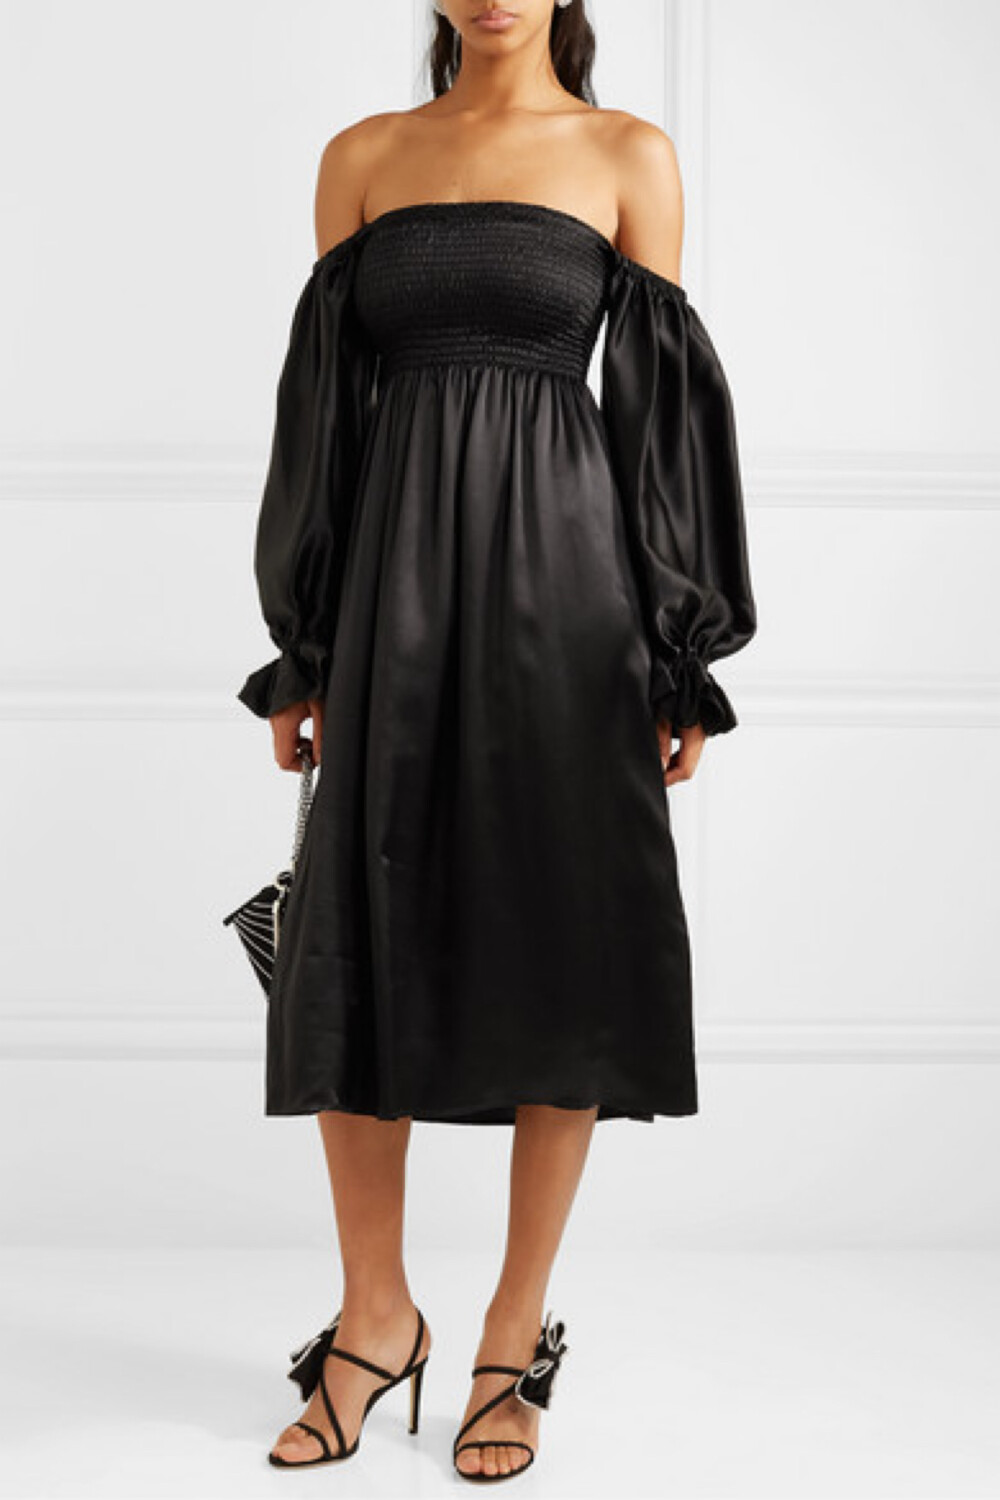 Sleeper 此番特地将品牌最畅销款式之一的 “Atlanta” 露肩连衣裙升级改造，为我们献上这件华美的黑色版本。单品裁自亮面丝缎，平行绉缝与泡泡袖形成和谐对比。不妨搭配细带凉鞋，烘托出它丰盈飘逸的裙摆。
